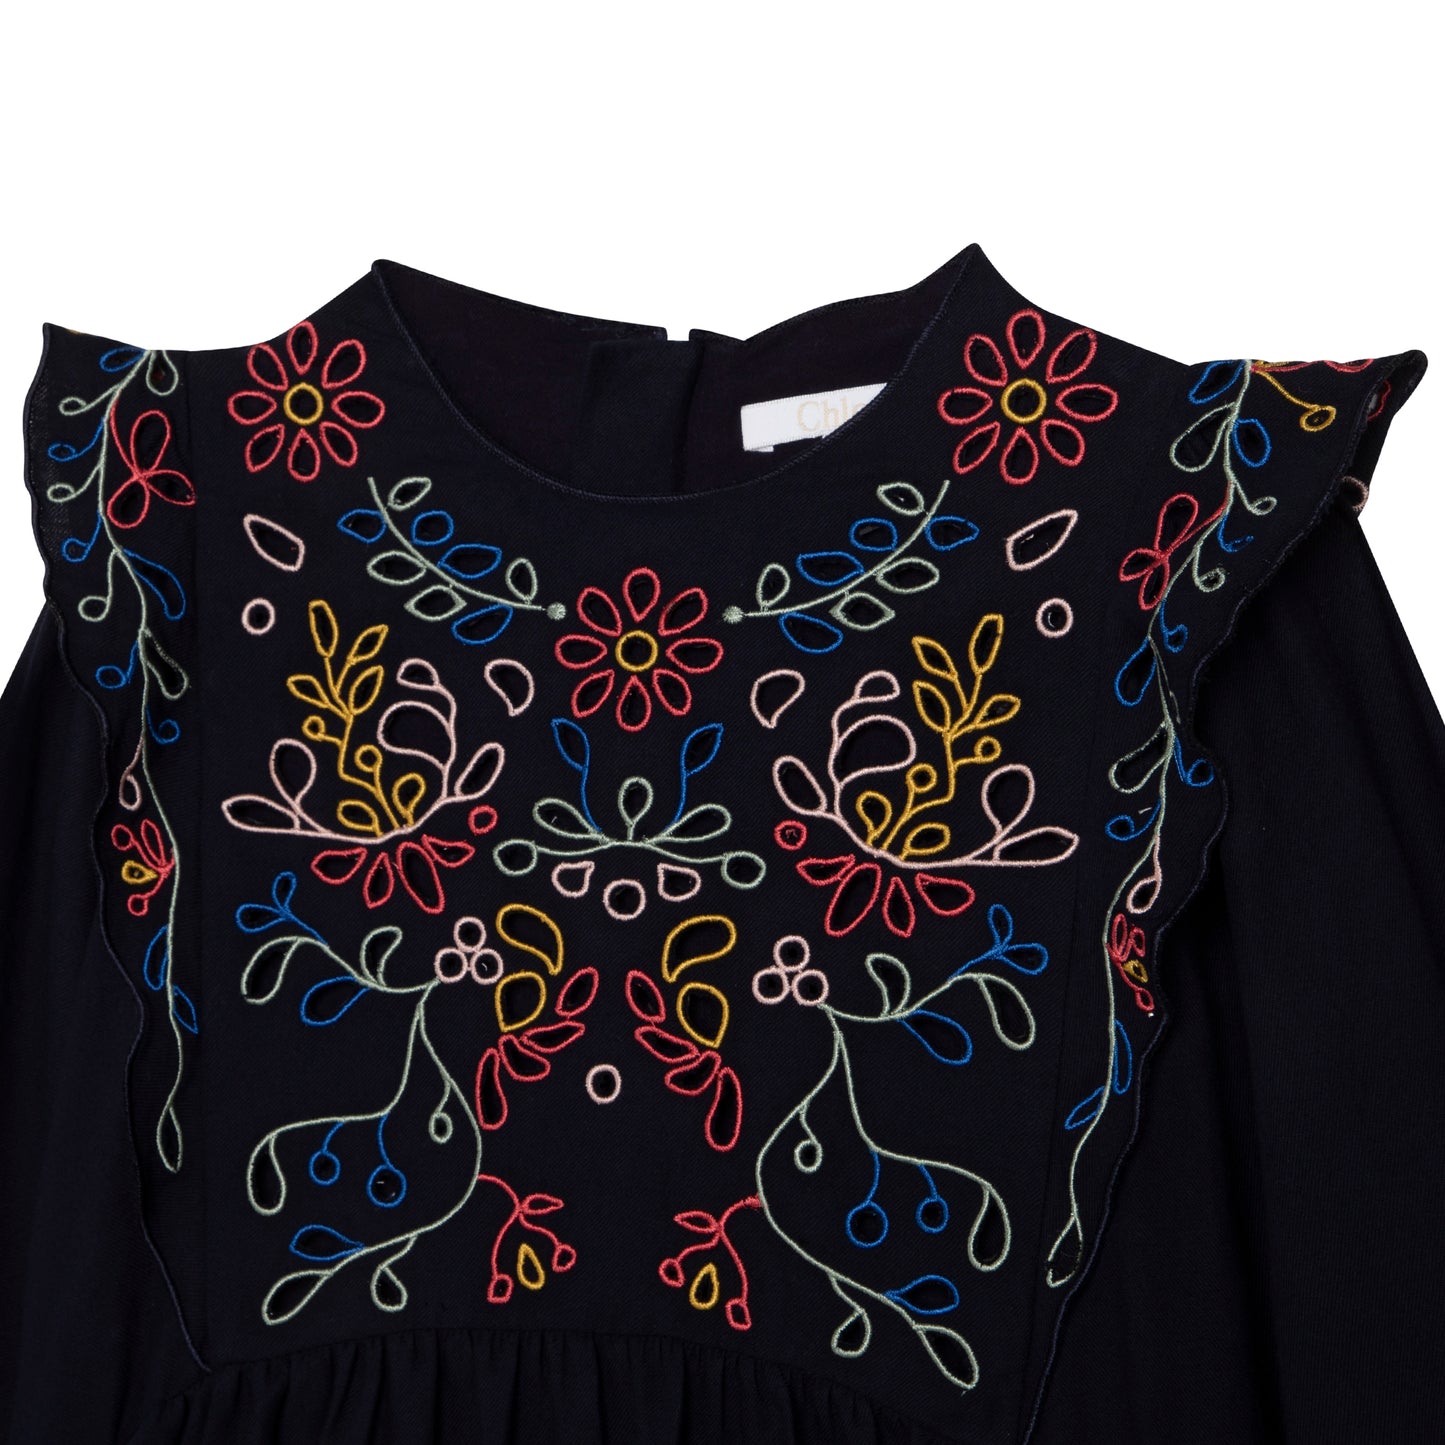 Chloe LS Twill Dress w/ Floral Embroidery